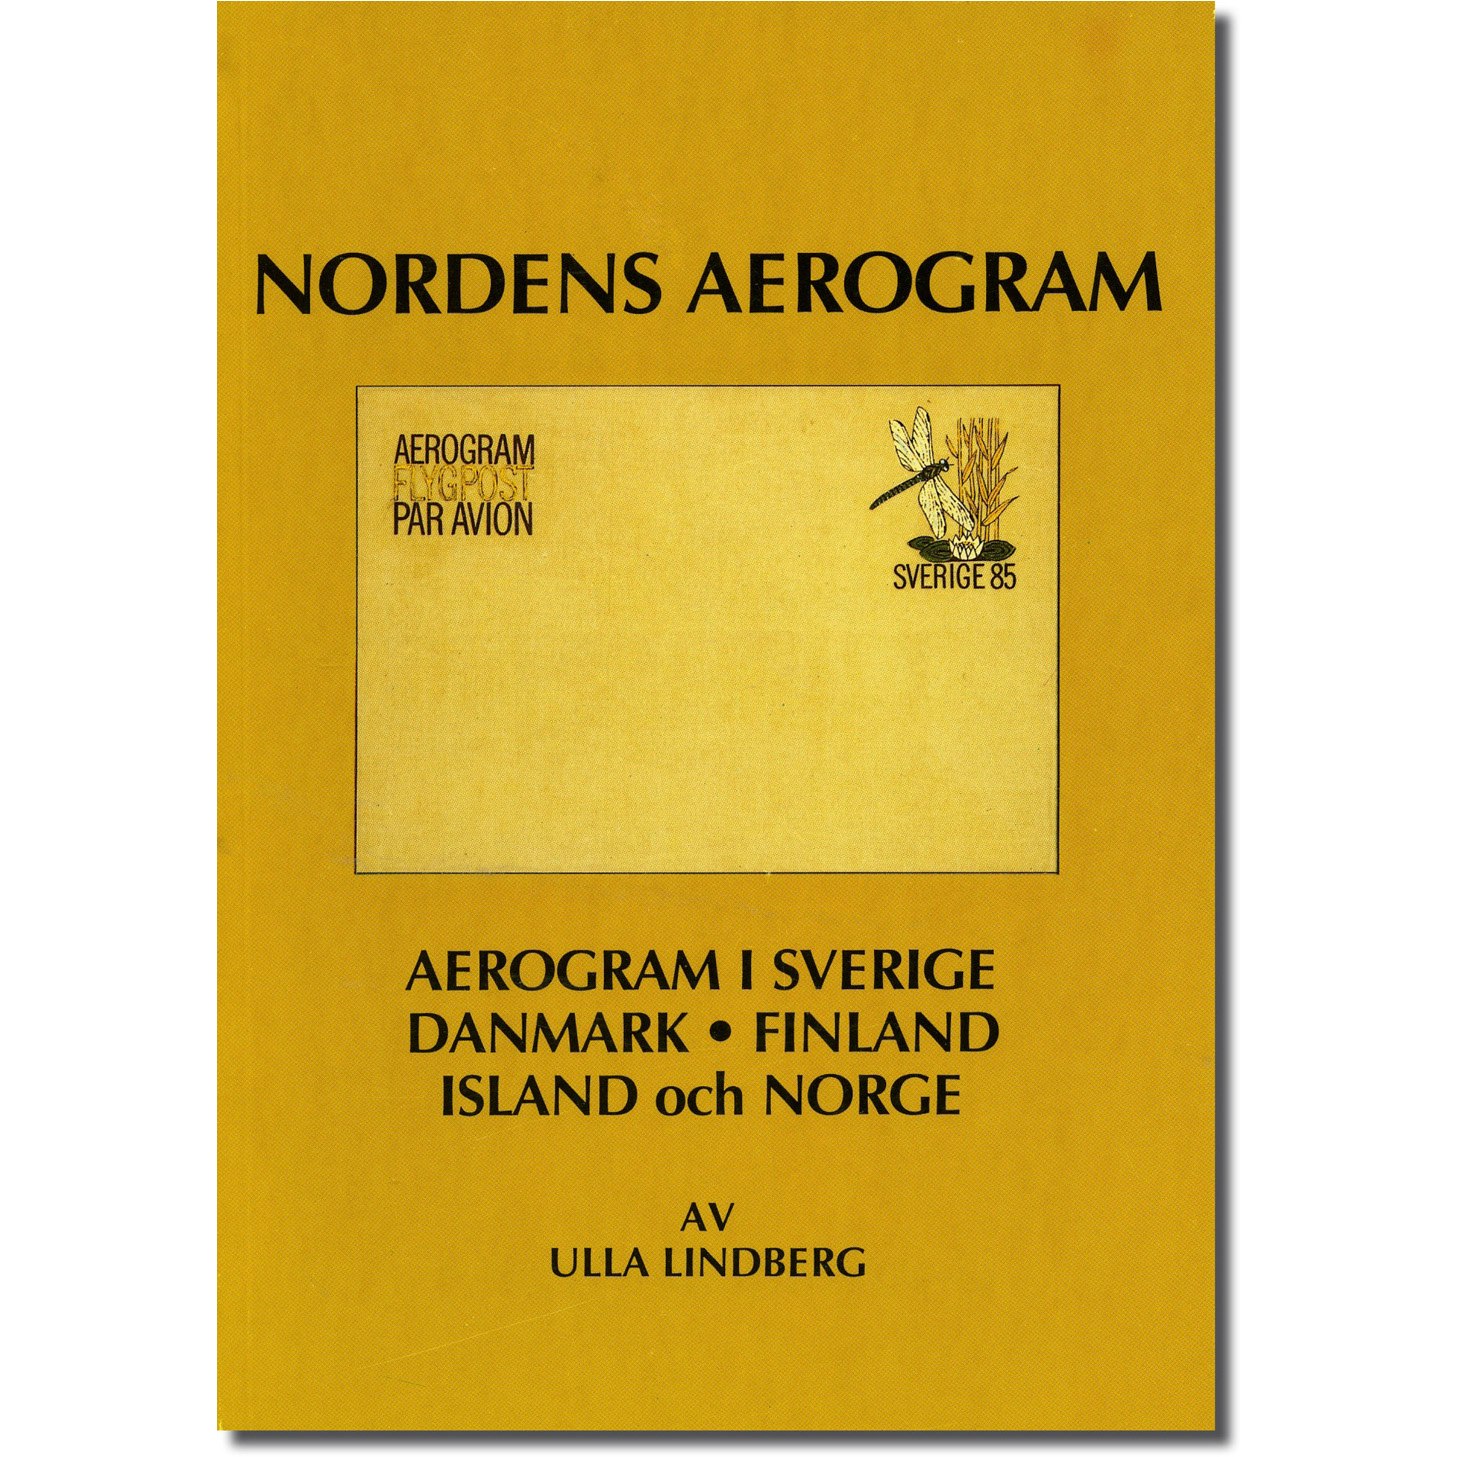 Nordens aerogram